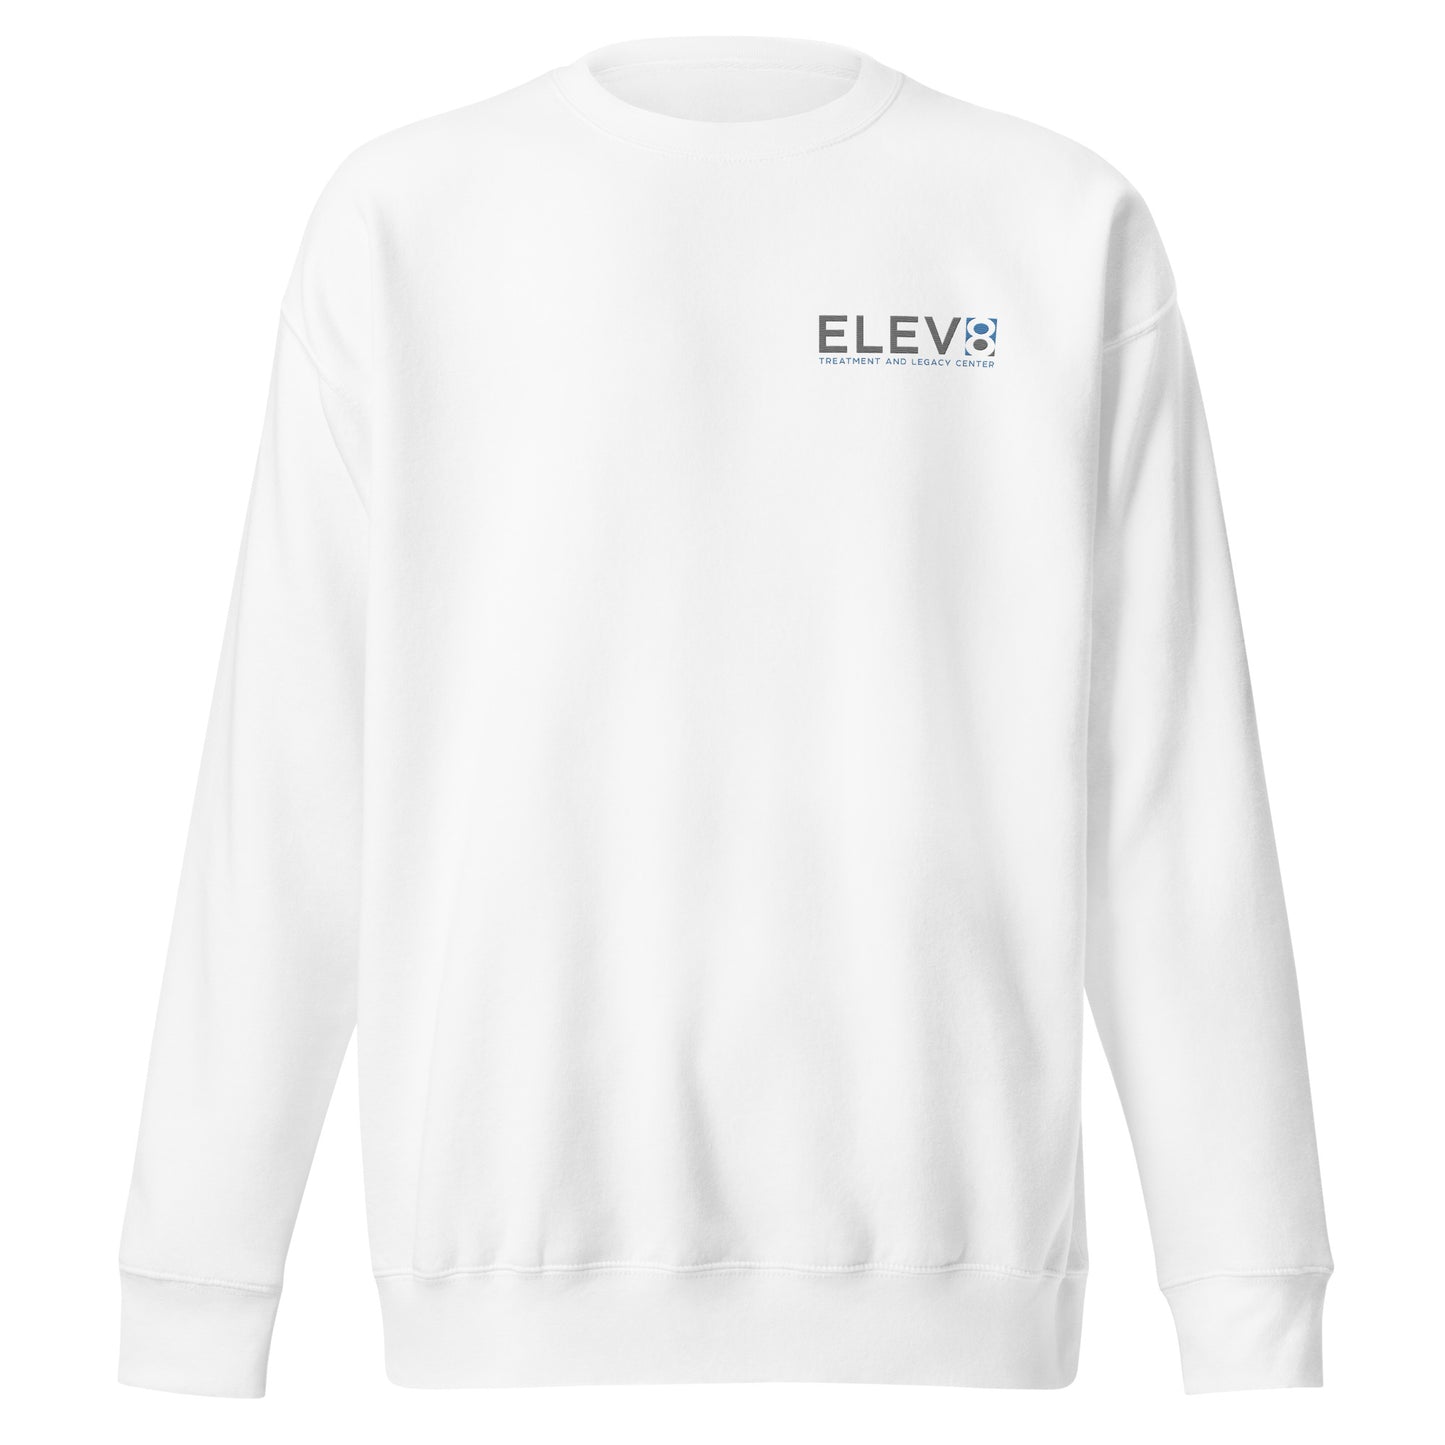 Elev8 Unisex Premium Sweatshirt